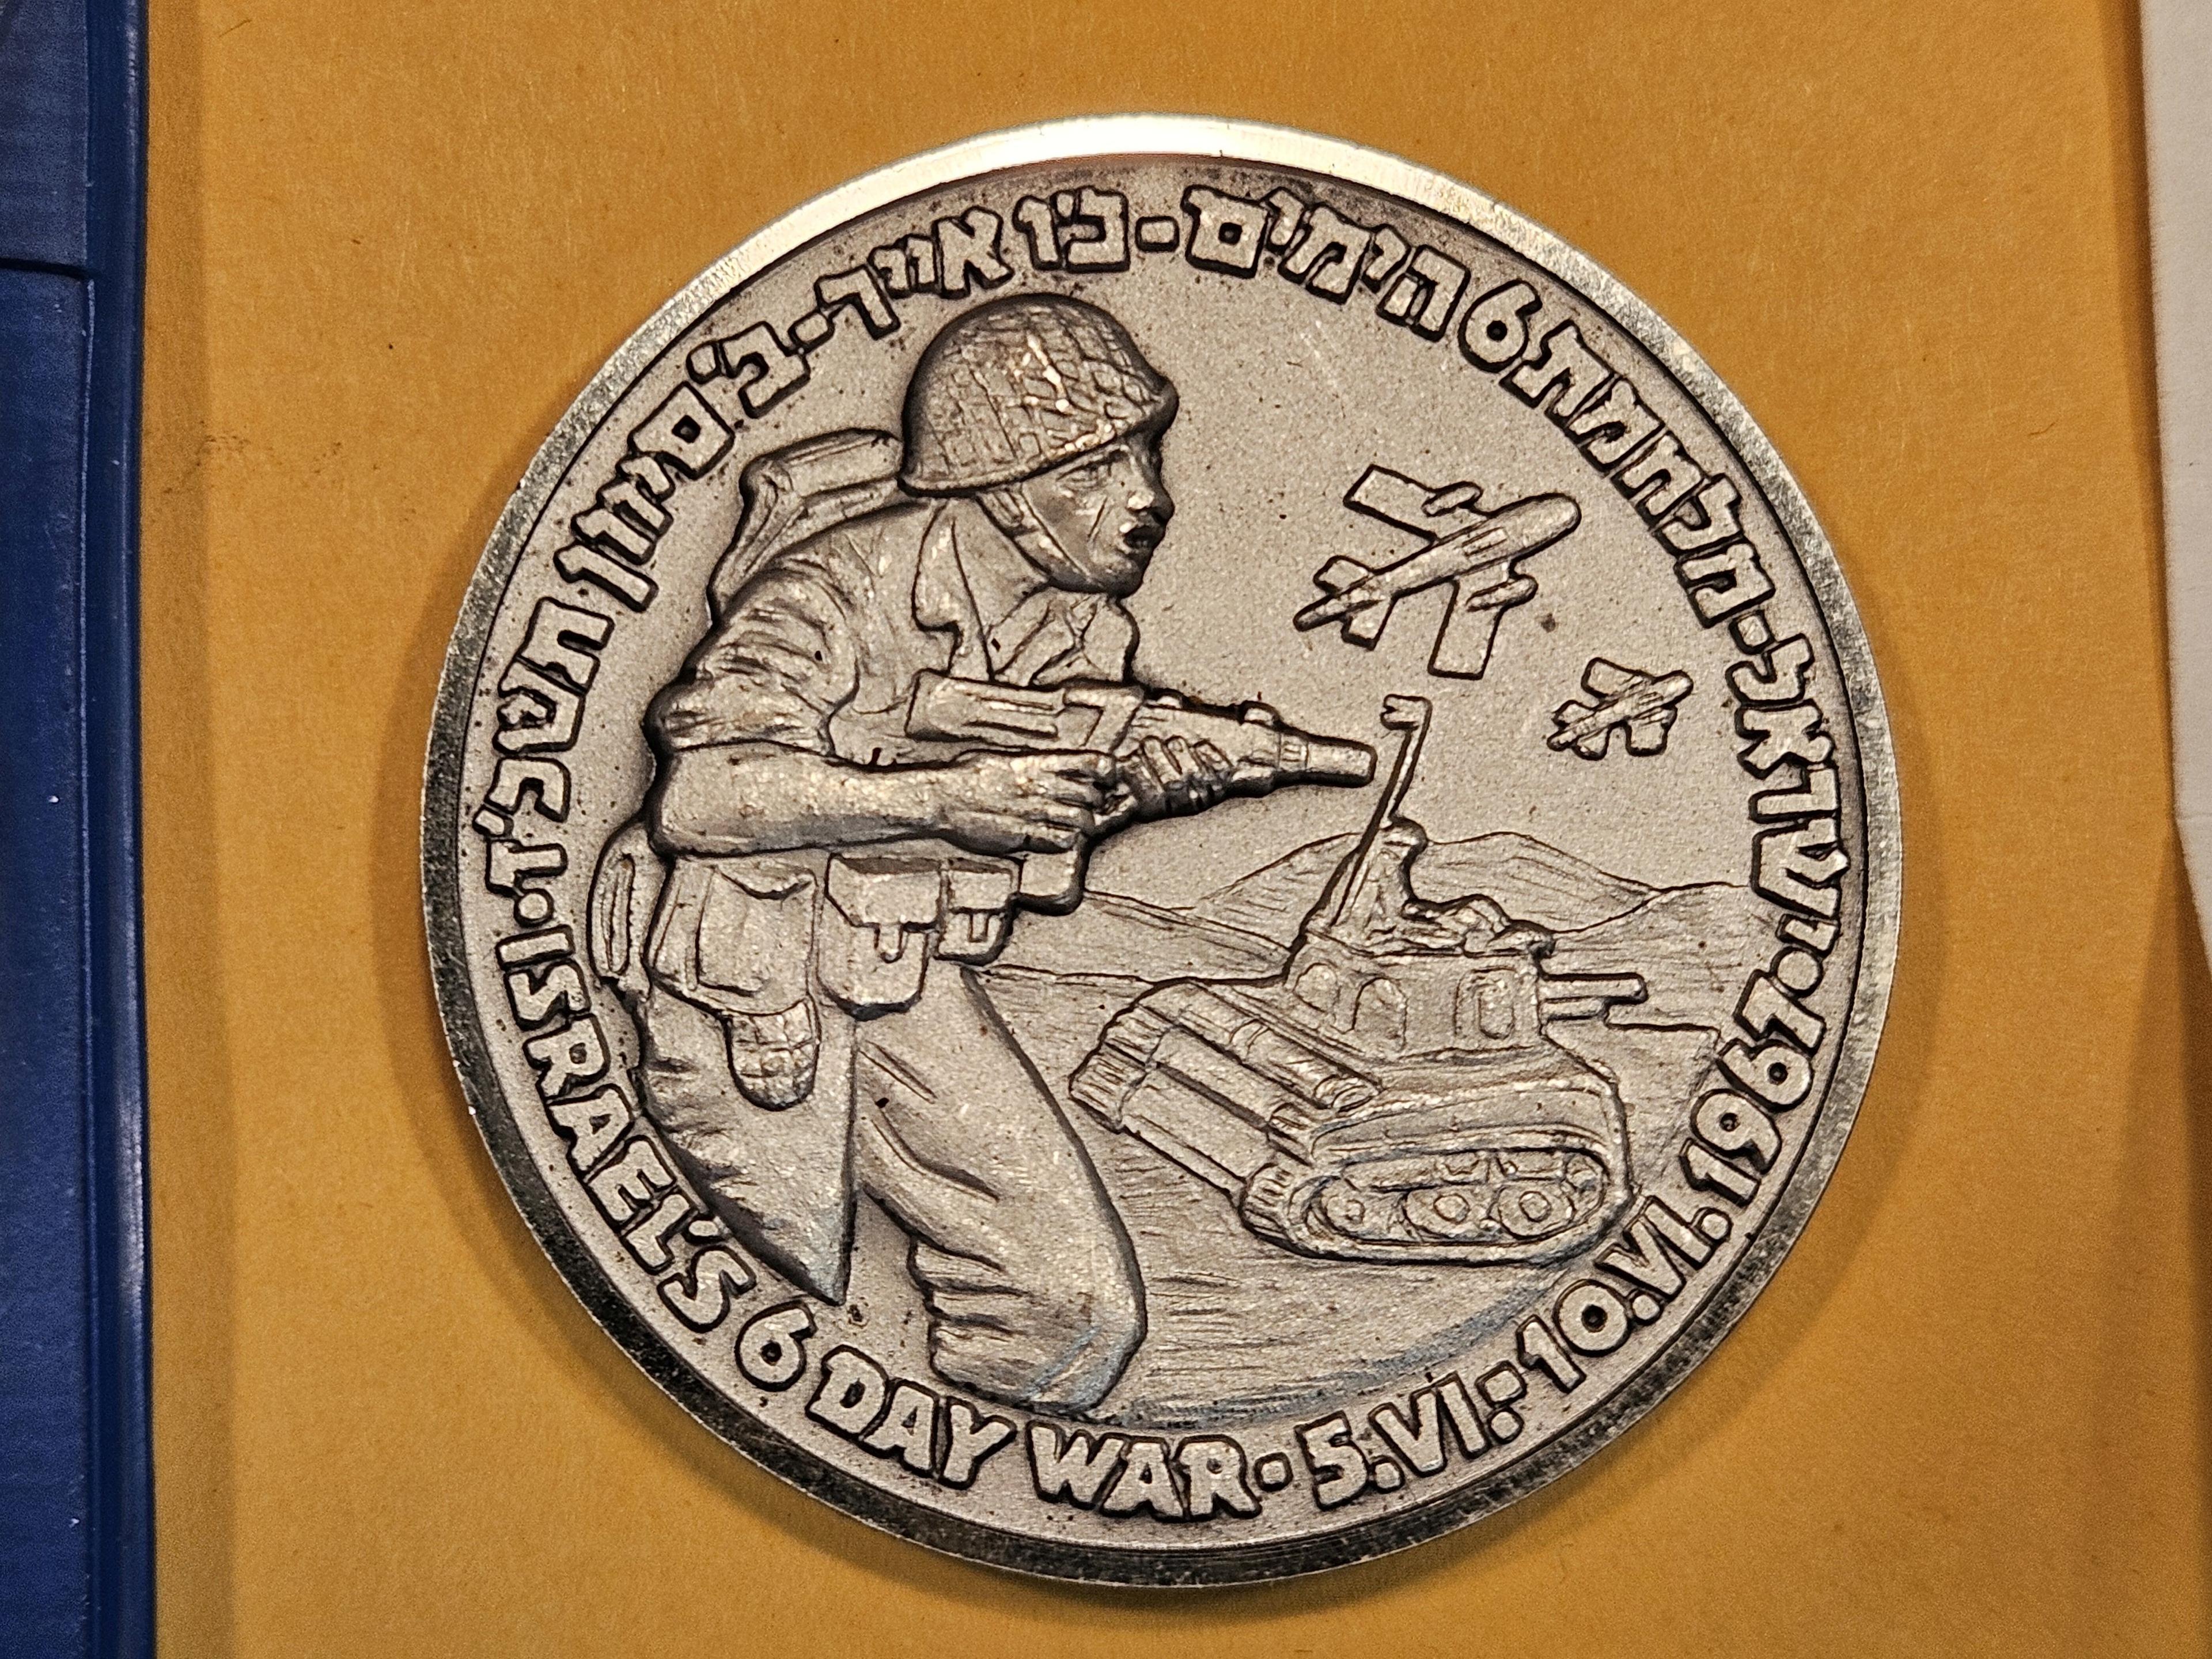 1967 Israeli Souvenir medal